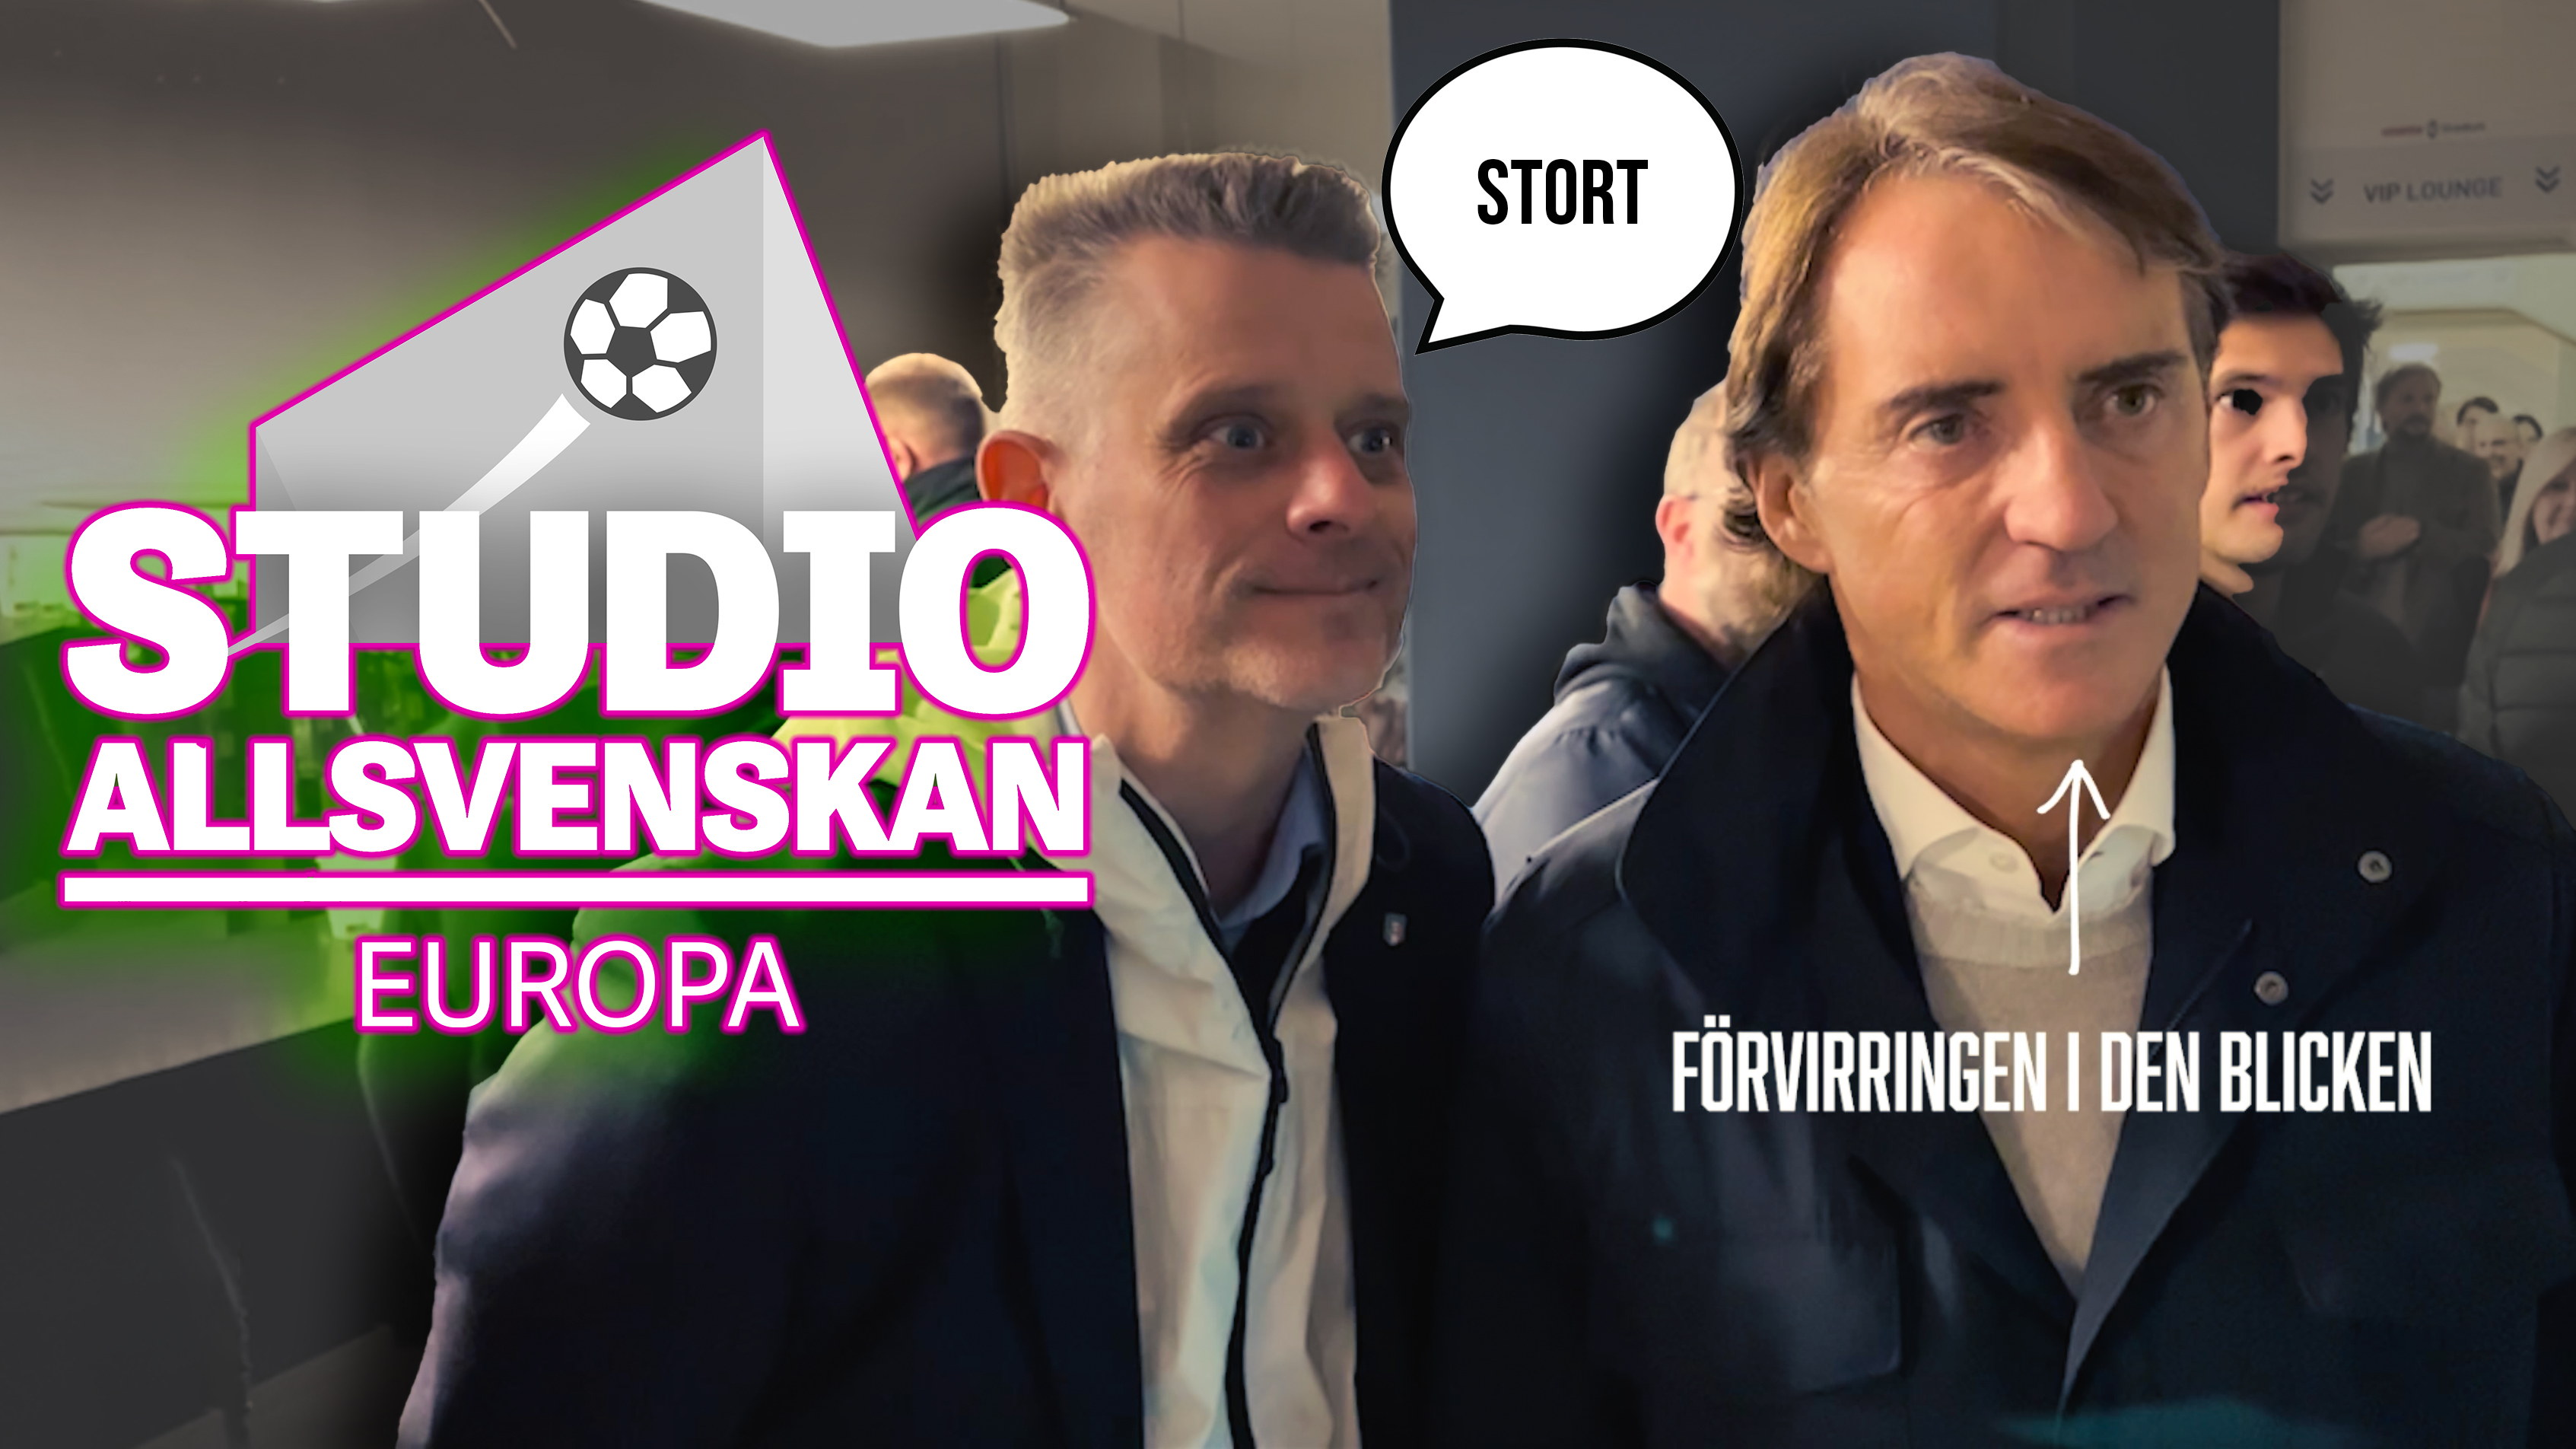 Atalanta, Roberto Mancini, serie a, Marcus Birro, Studio Allsvenskan Europa, Studio Allsvenskan, Napoli